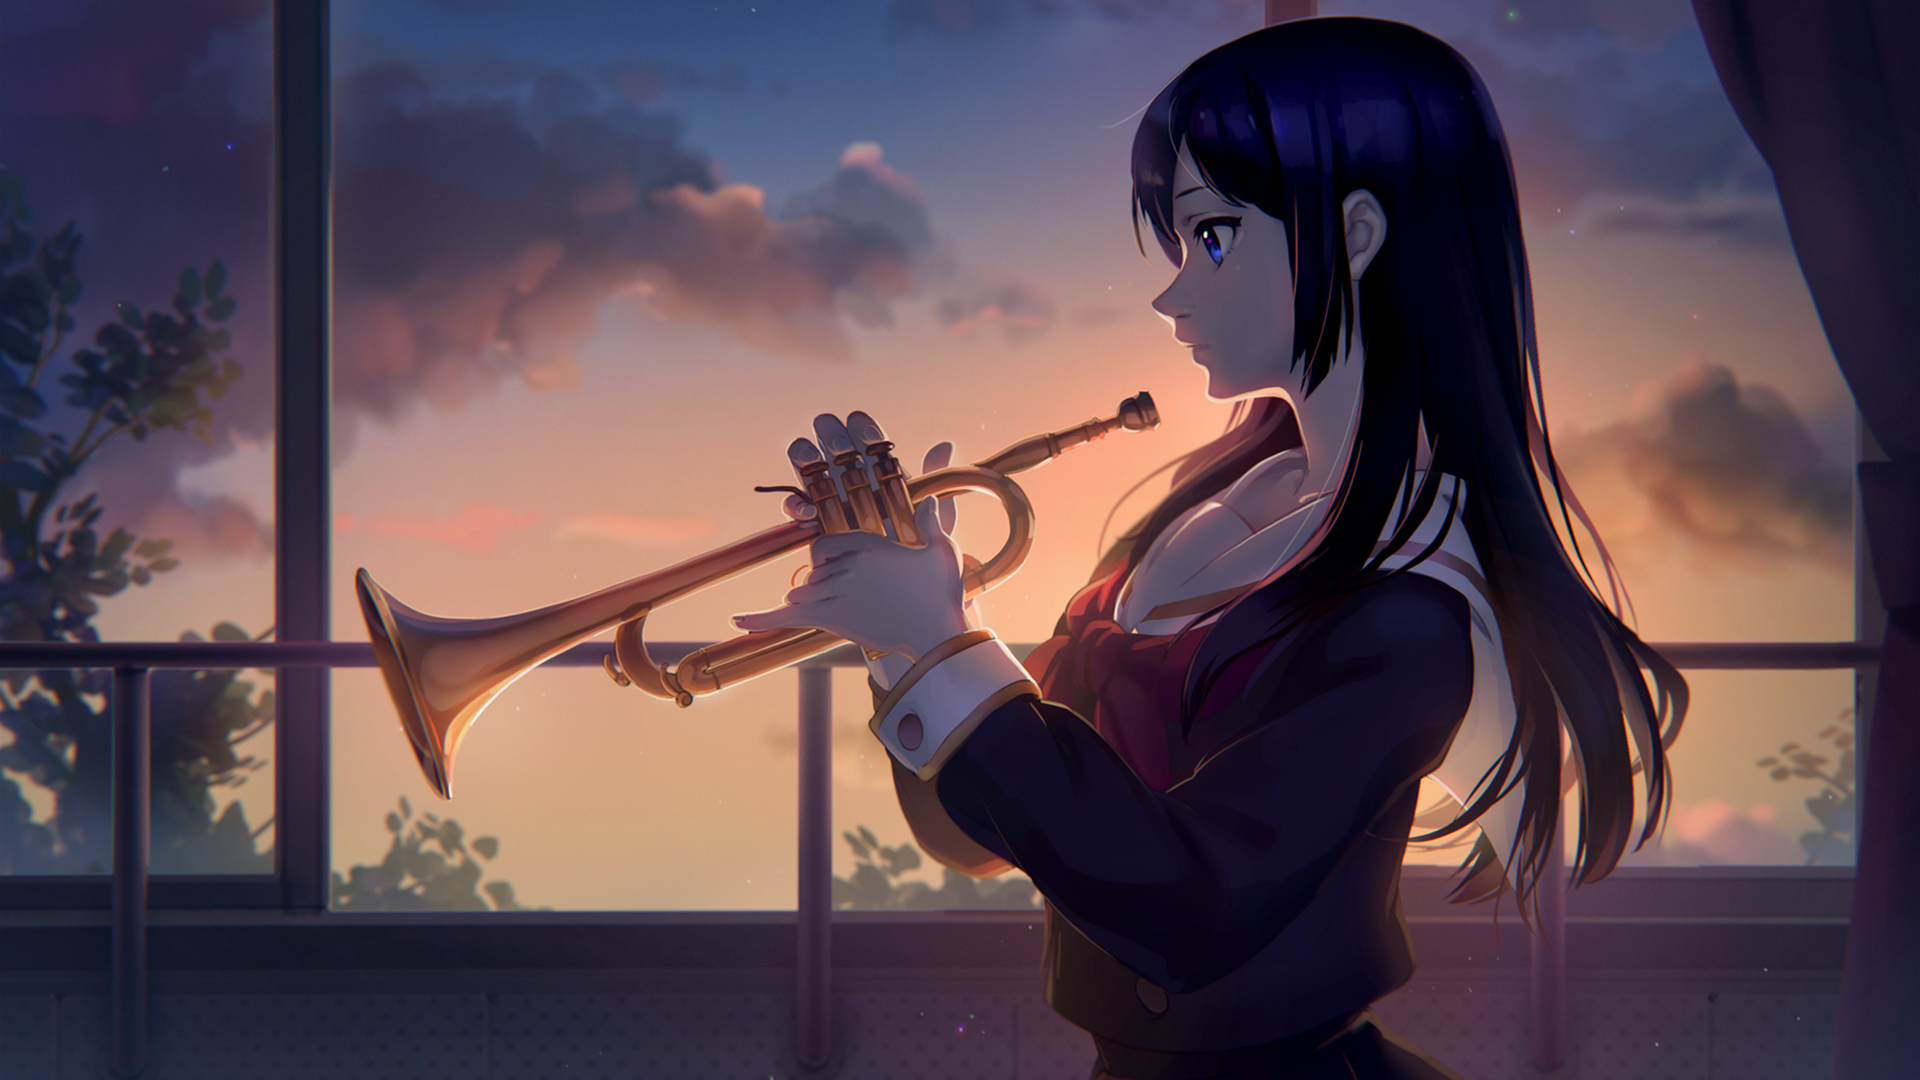 Anime 1920x1080 anime anime girls Kousaka Reina Hibike! Euphonium long hair blue eyes trumpet evening window school uniform clouds dark hair musical instrument musician music